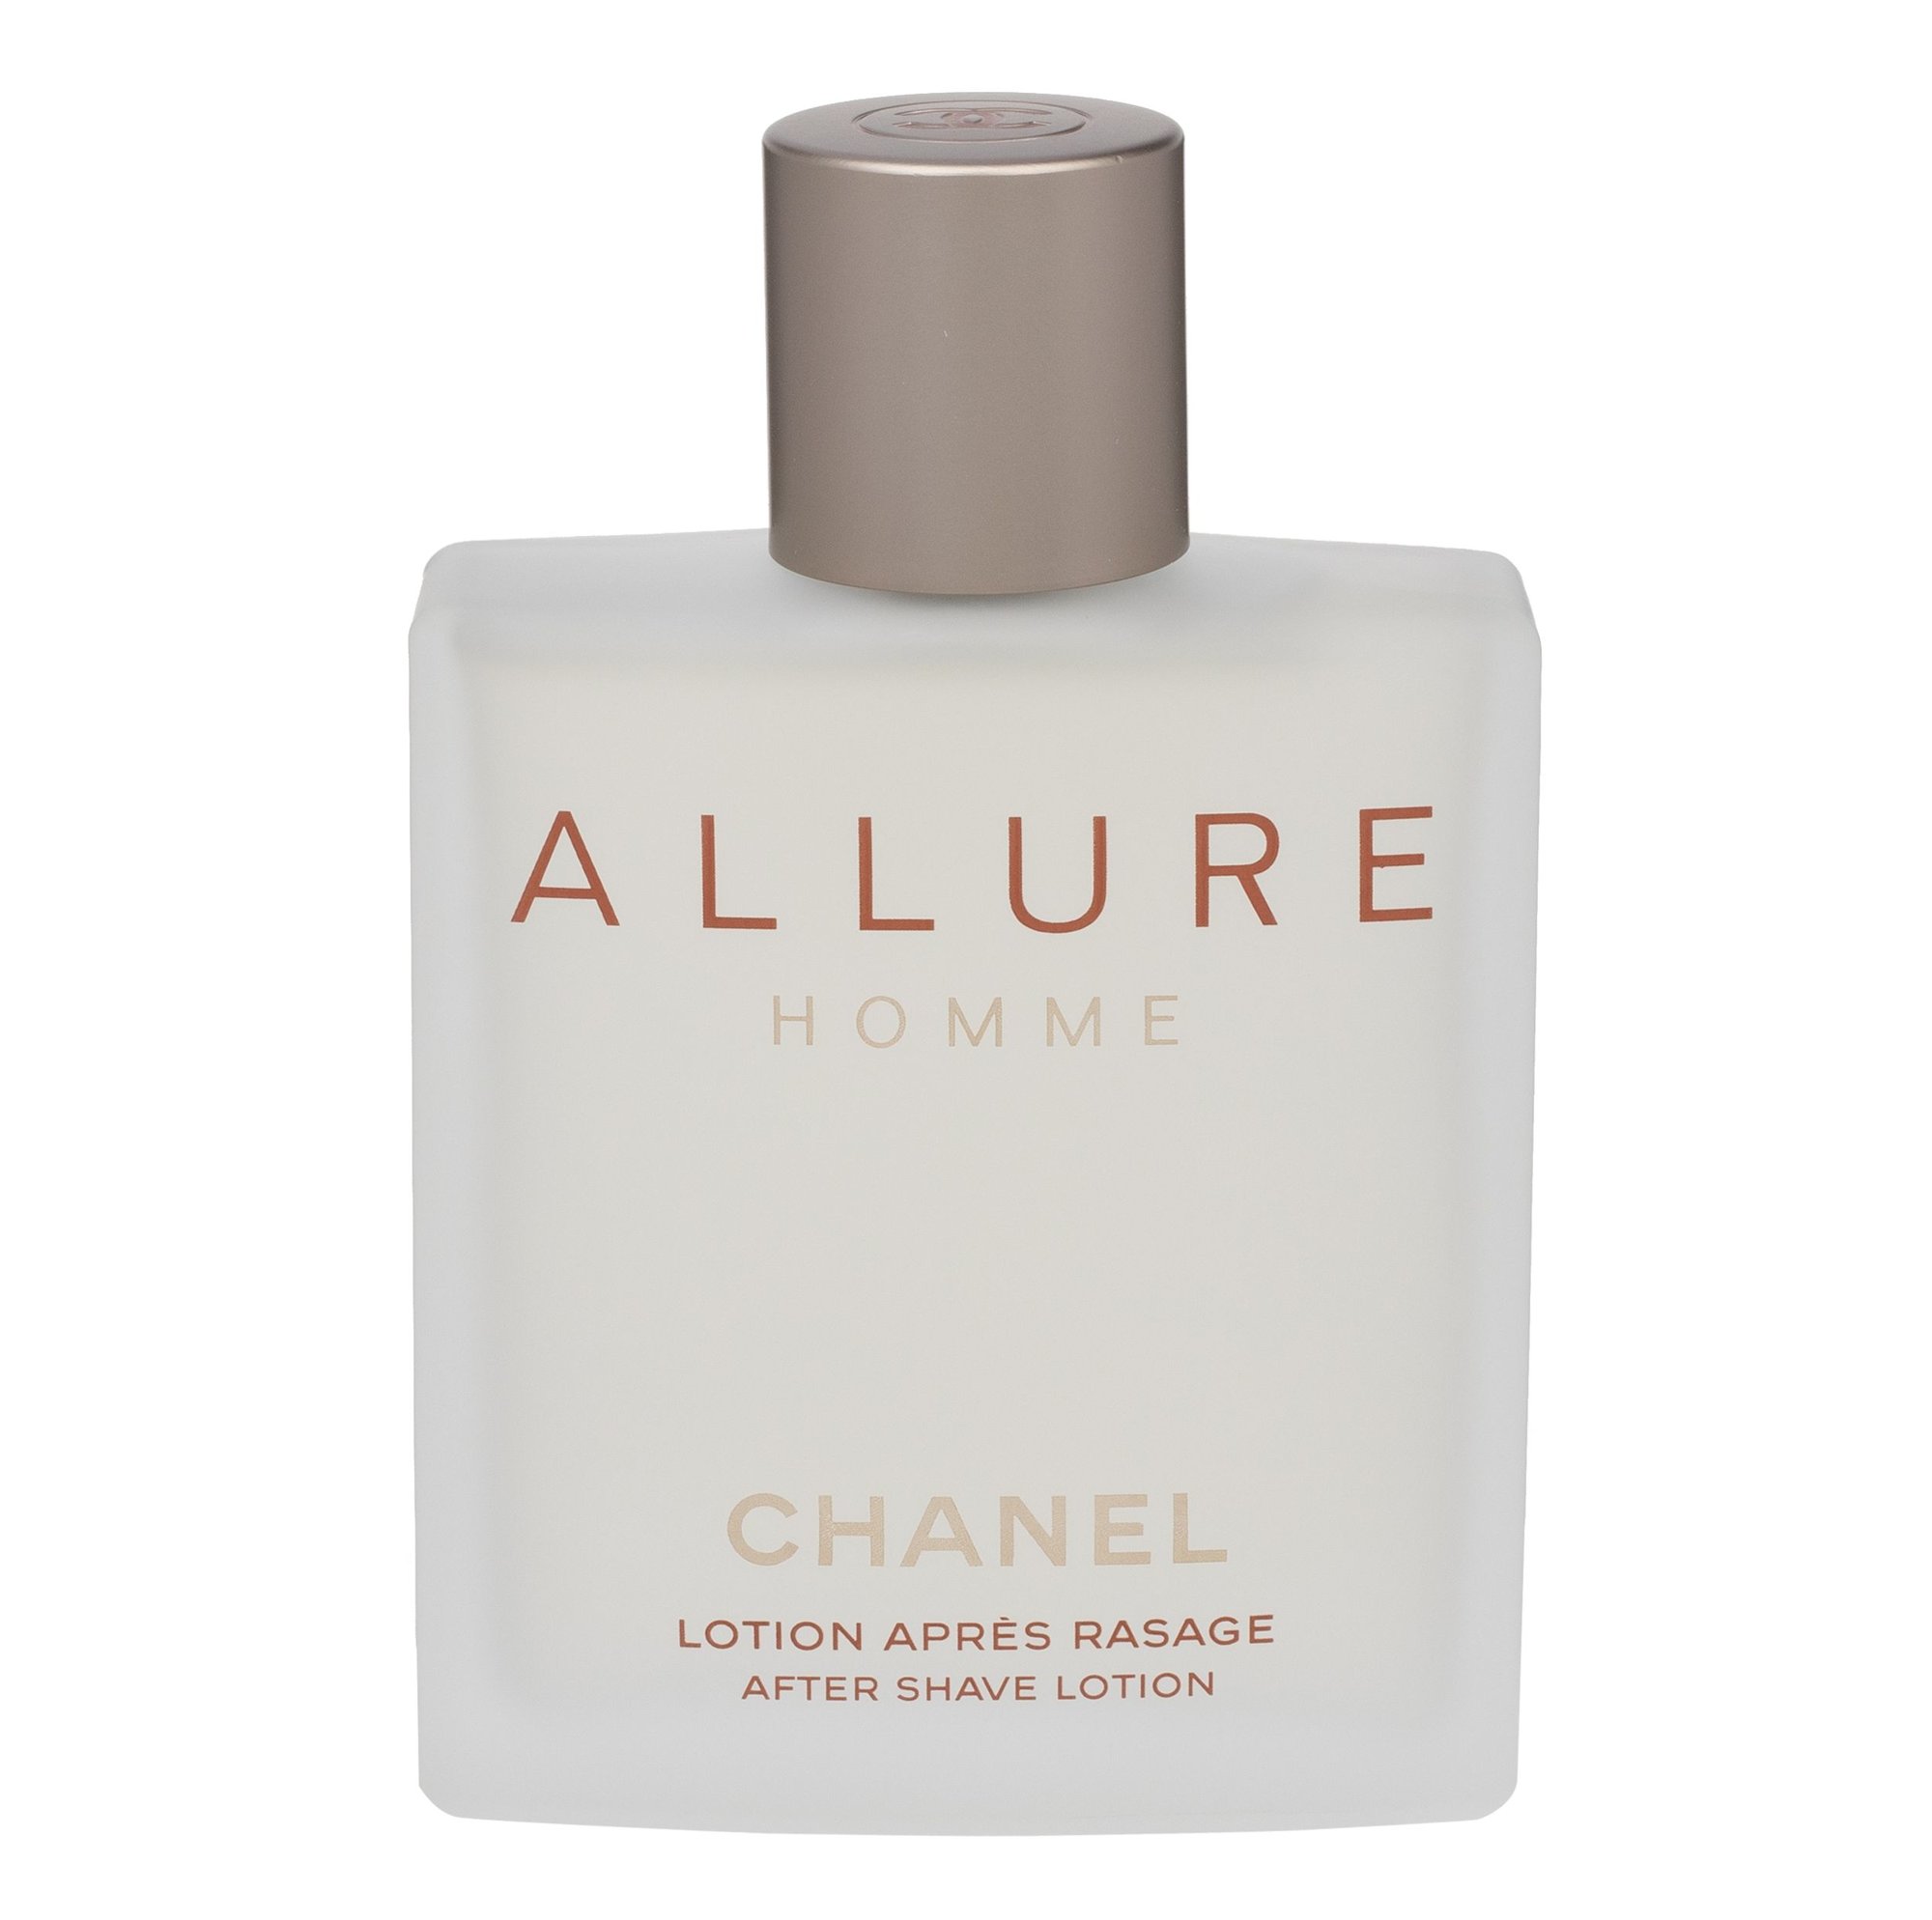 Chanel Allure Homme vanduo po skutimosi